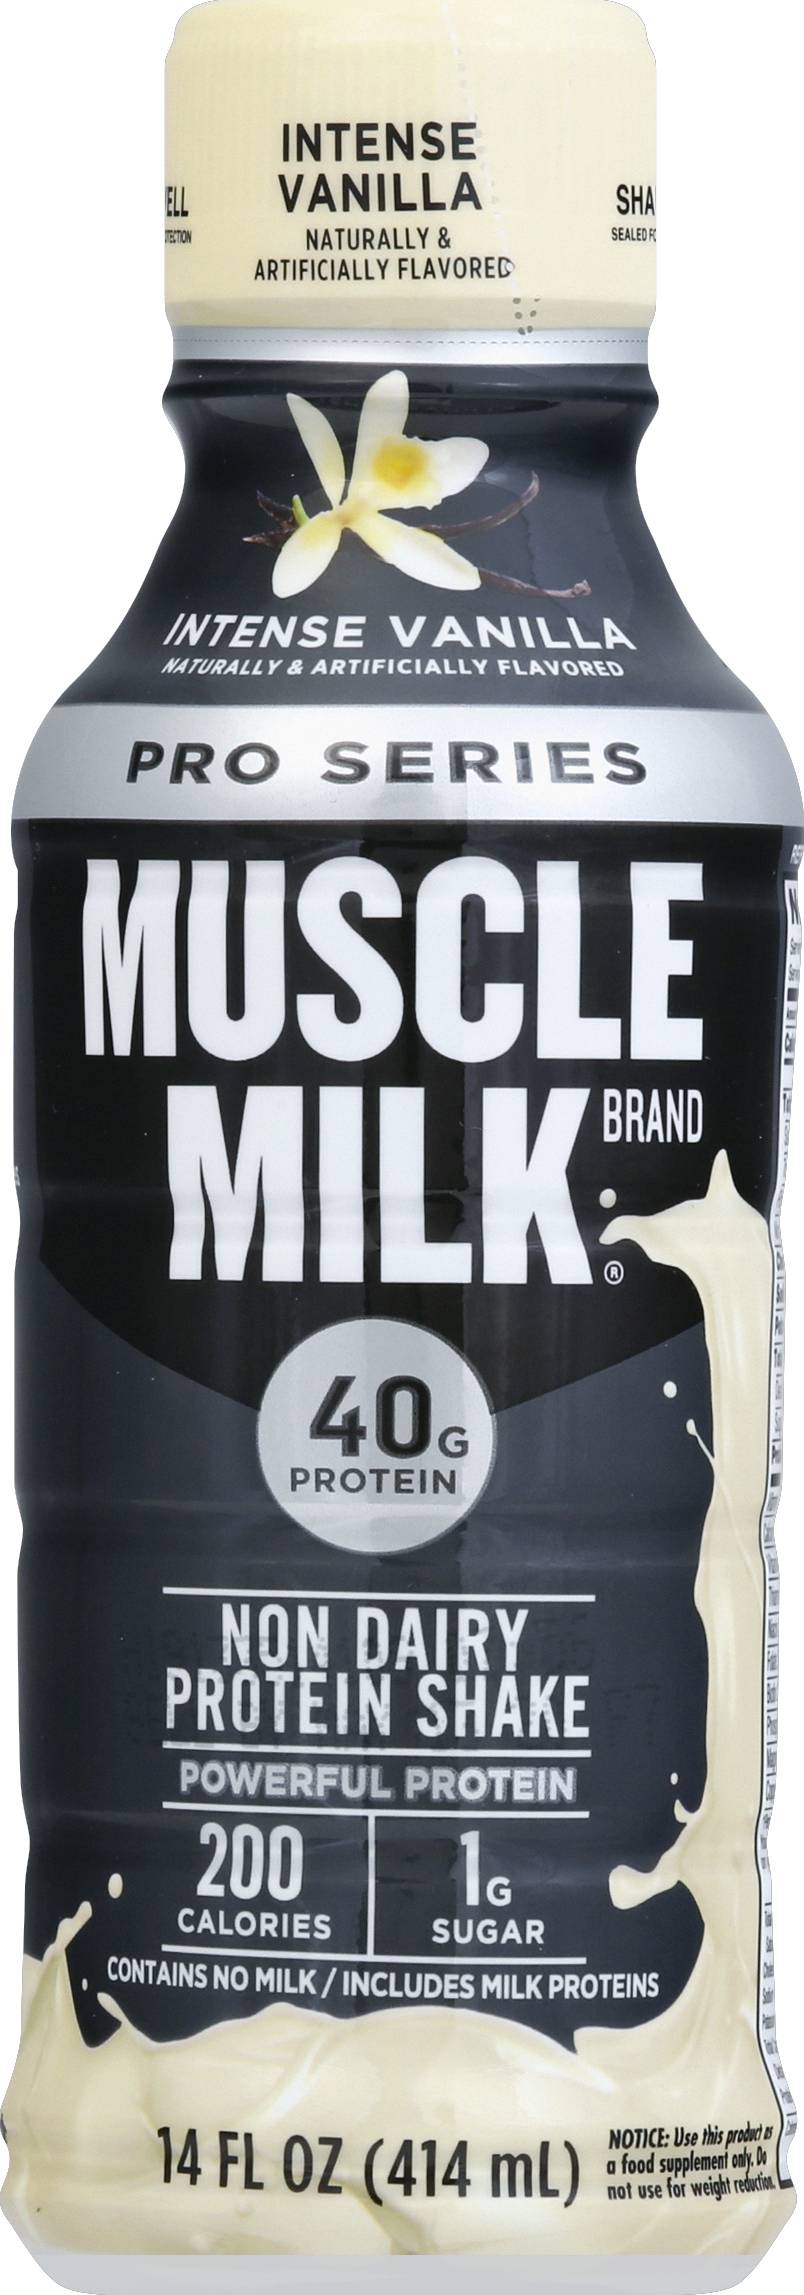 Muscle Milk Pro Intense Non Dairy Protein Shake (14 fl oz) (vanilla)